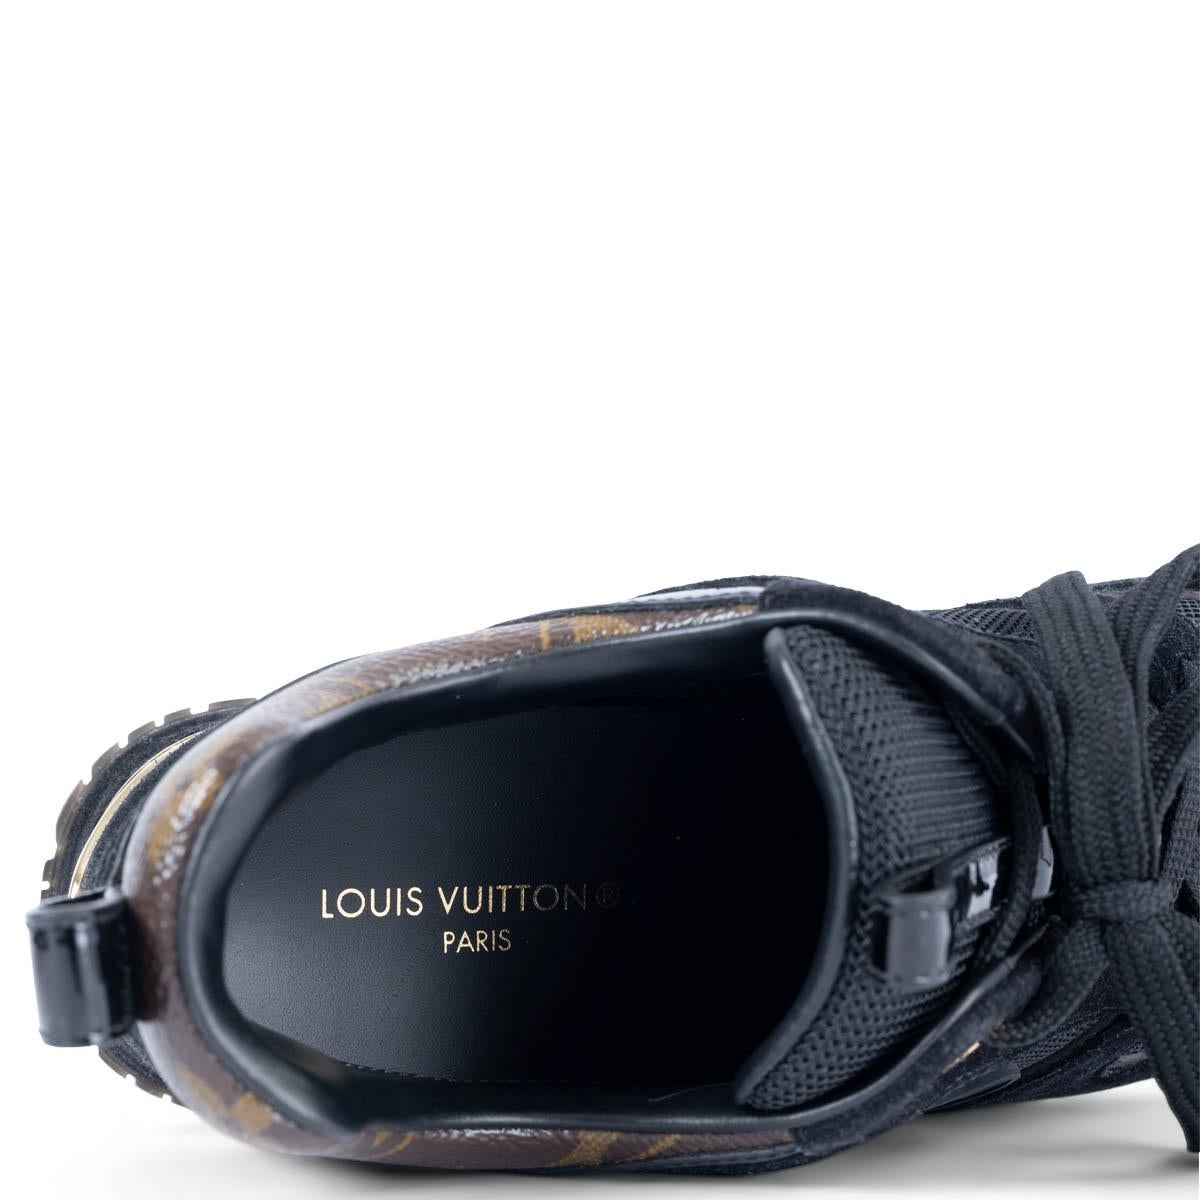 LOUIS VUITTON black suede & Monogram RUN AWAY Sneakers Shoes 37 For Sale 3